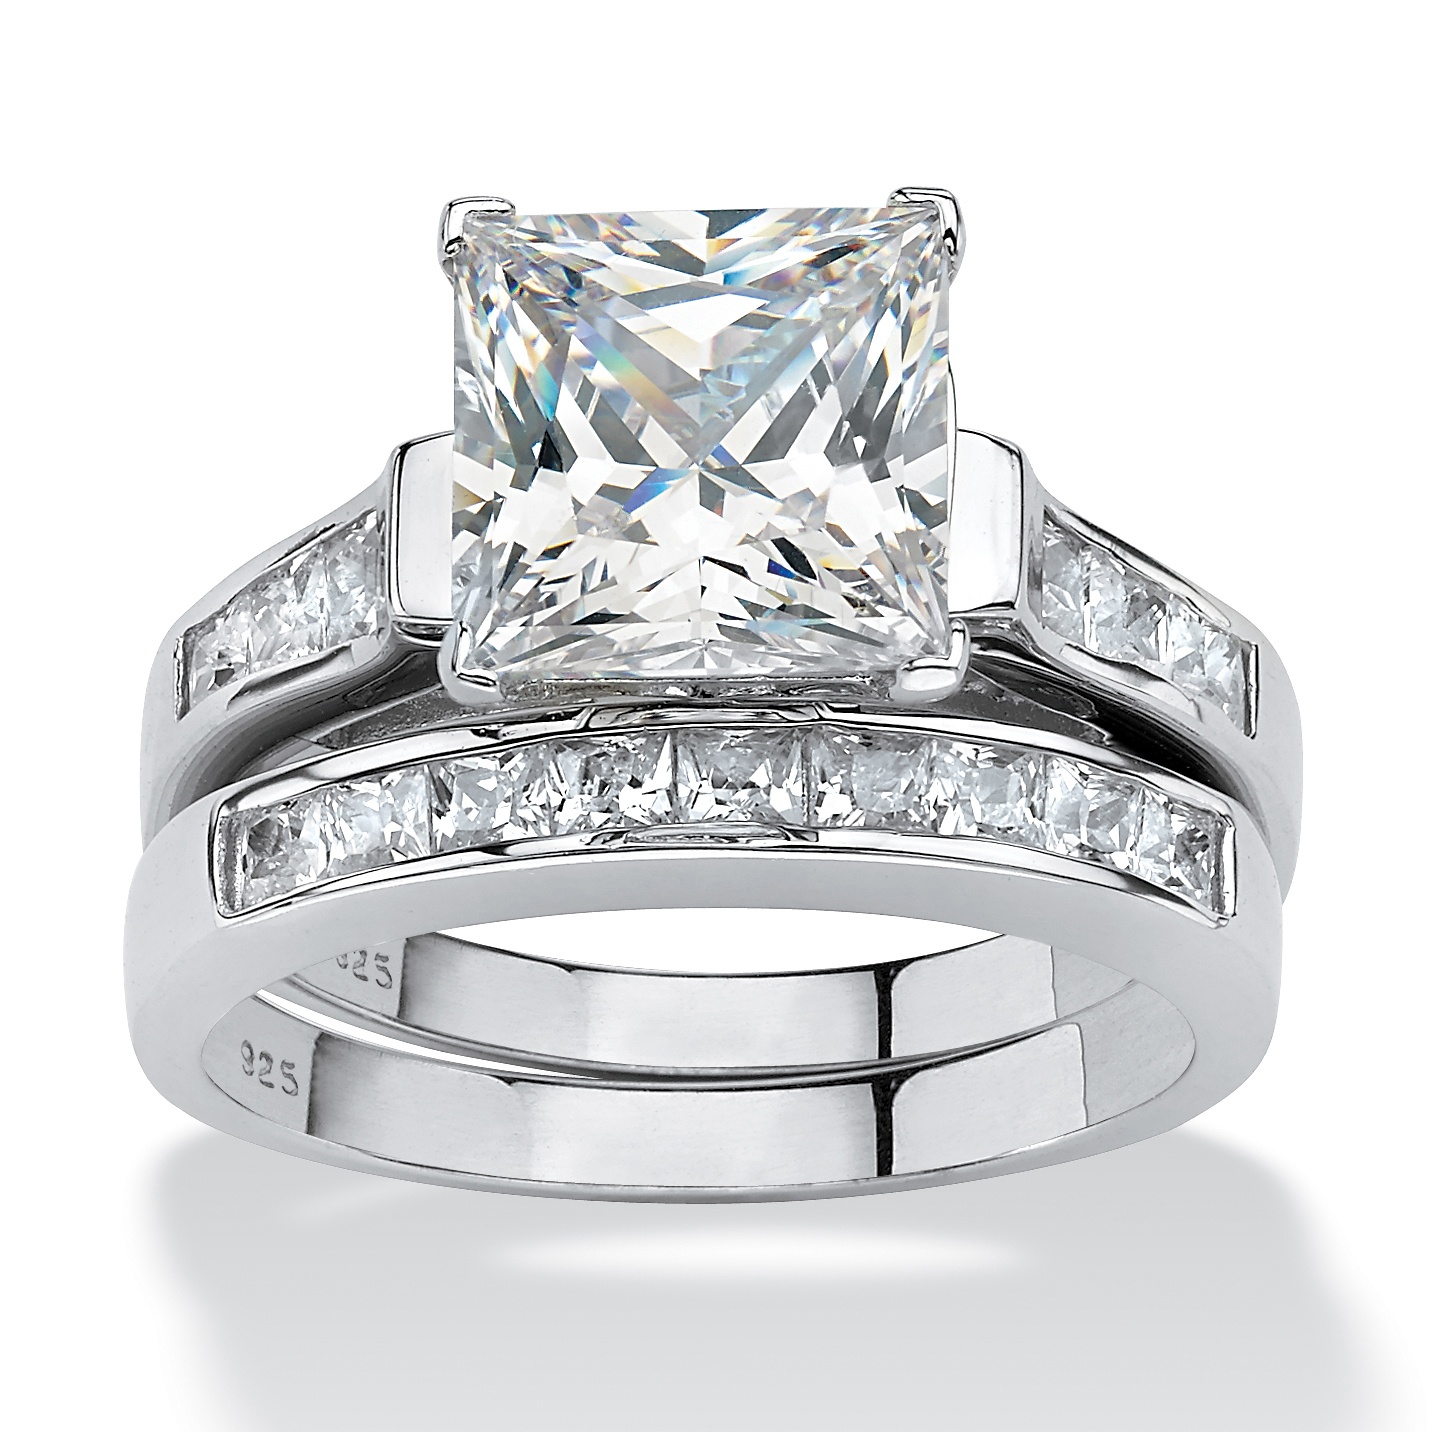 Stunning 4 ct Princess cut 925 Silver 2 piece Bridal Wedding ring designer Set 